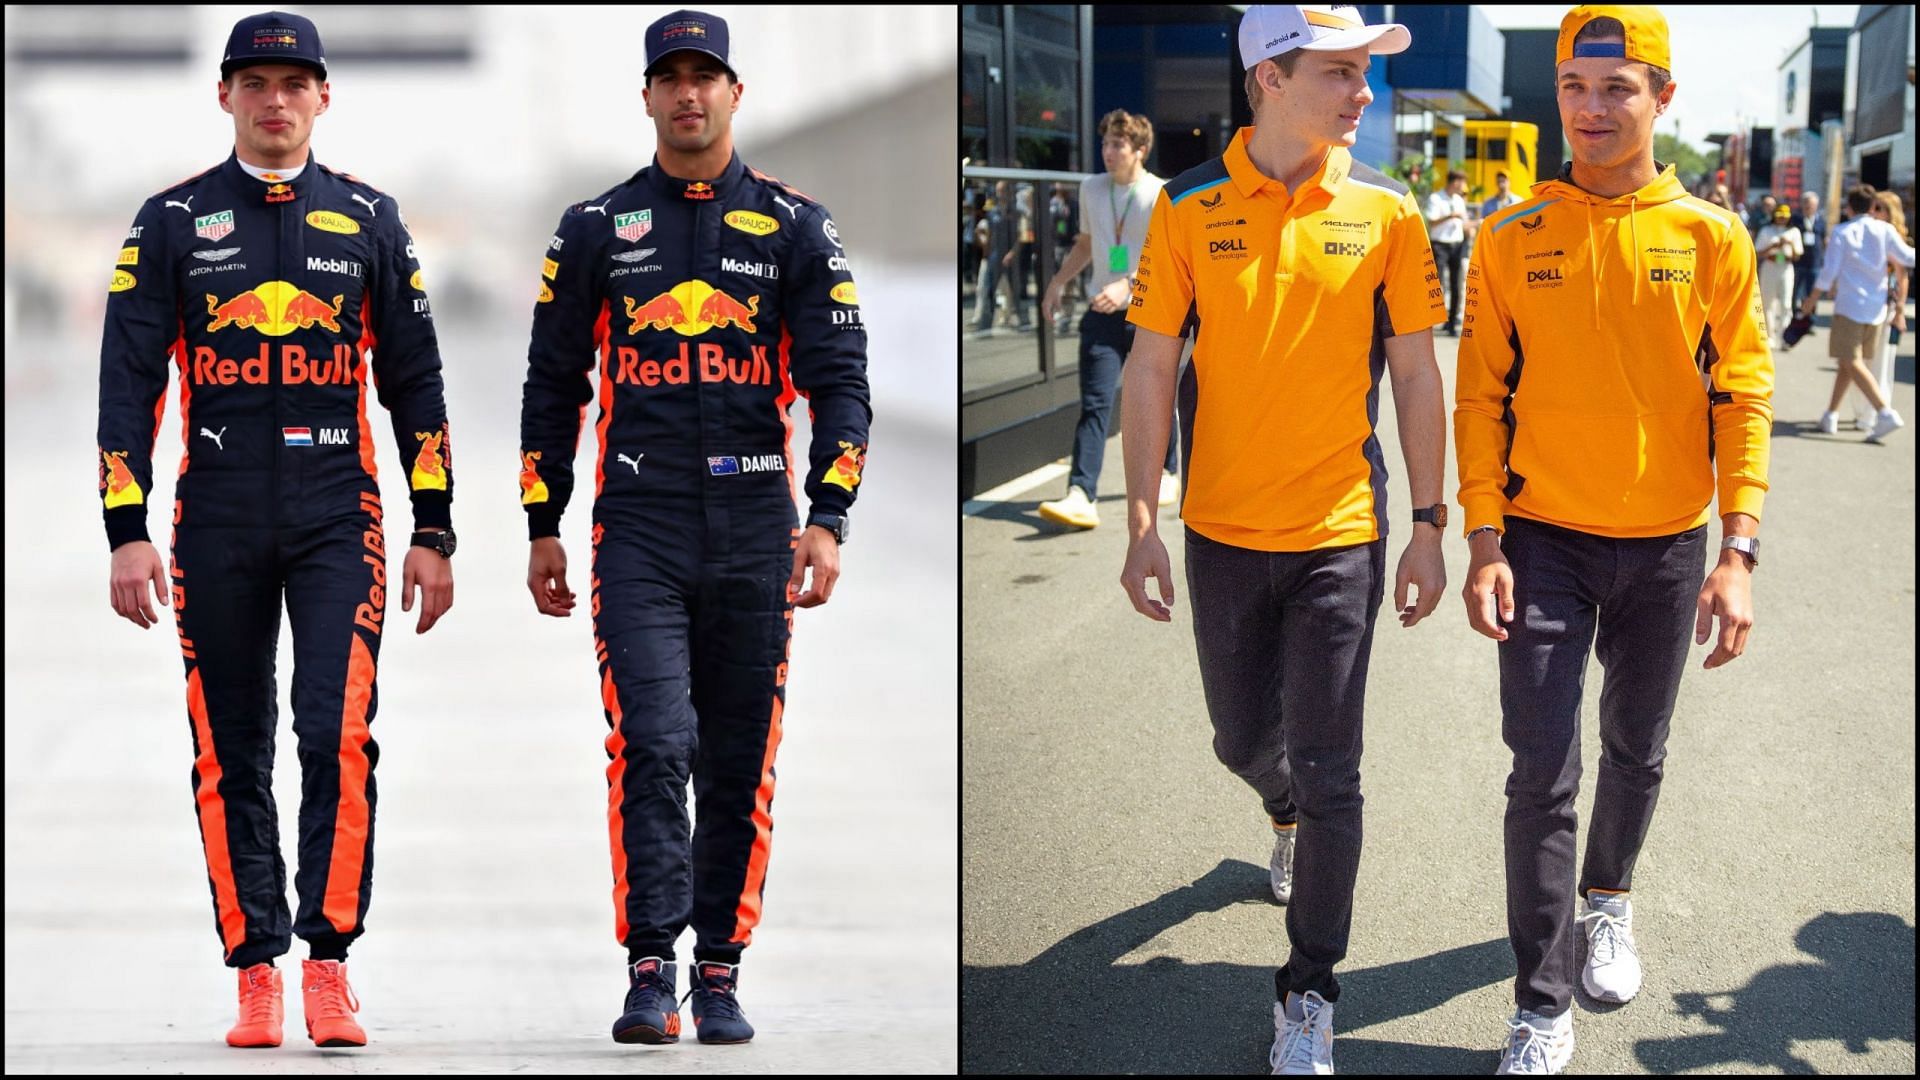 Oscar Piastri, Lando Norris, Max Verstappen and Daniel Ricciardo